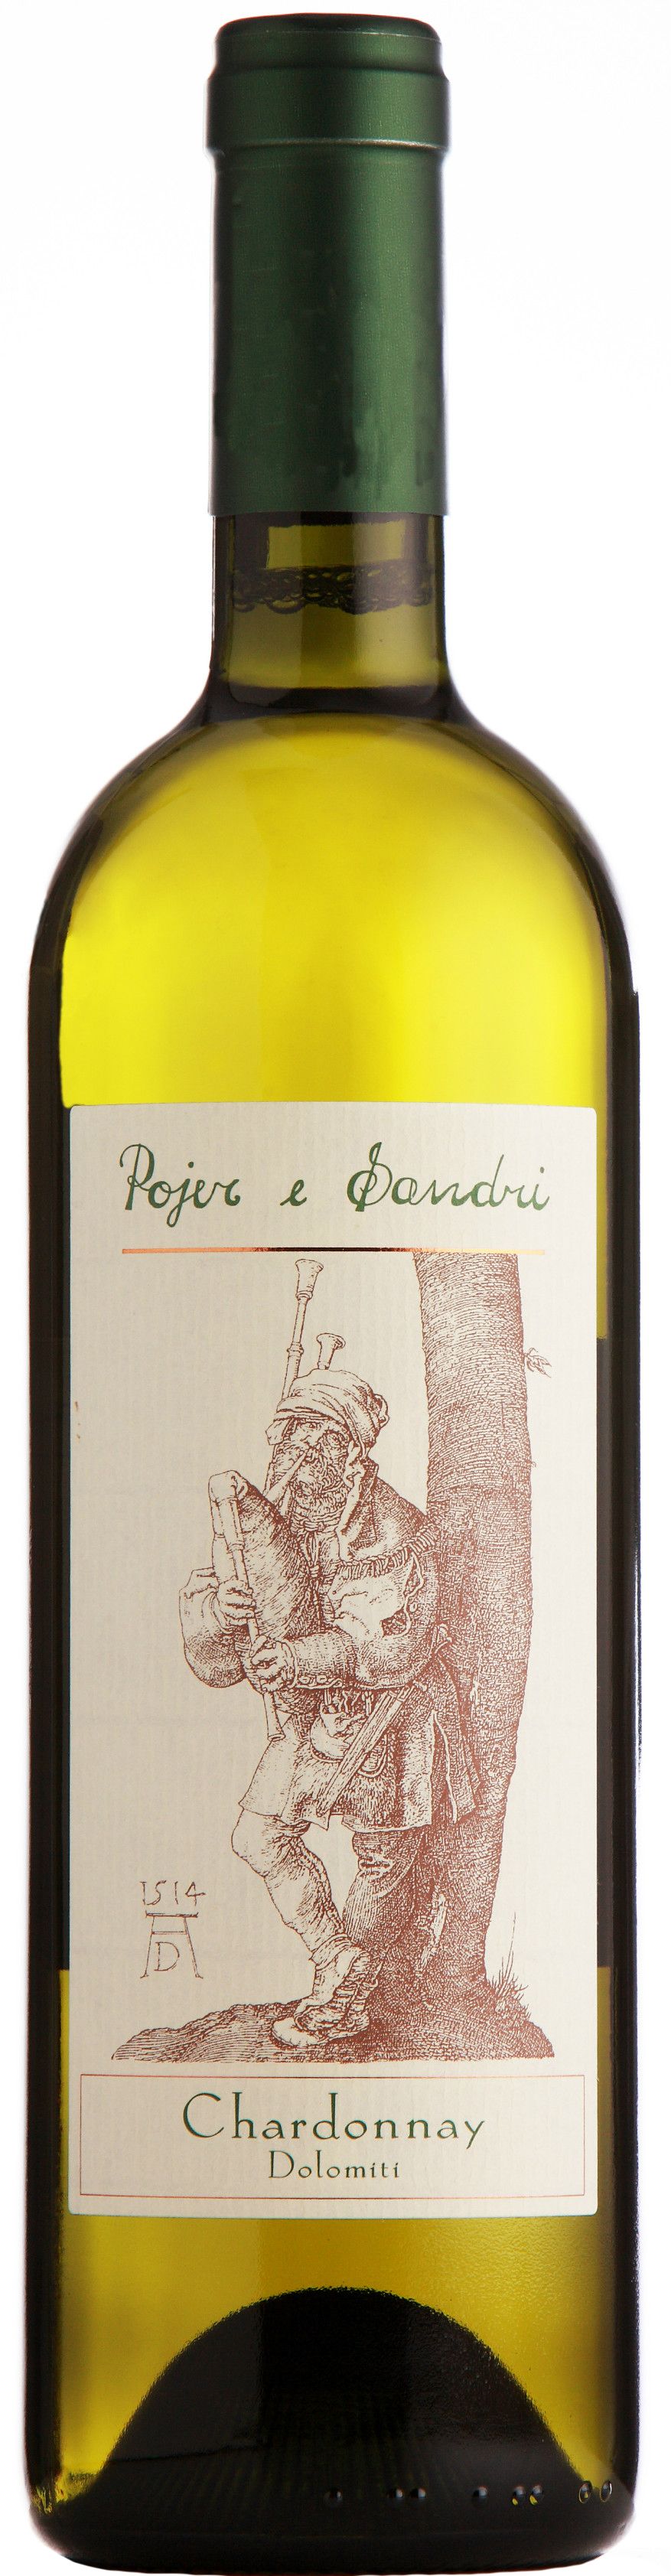 Pojer & Sandri, Chardonnay, 2014